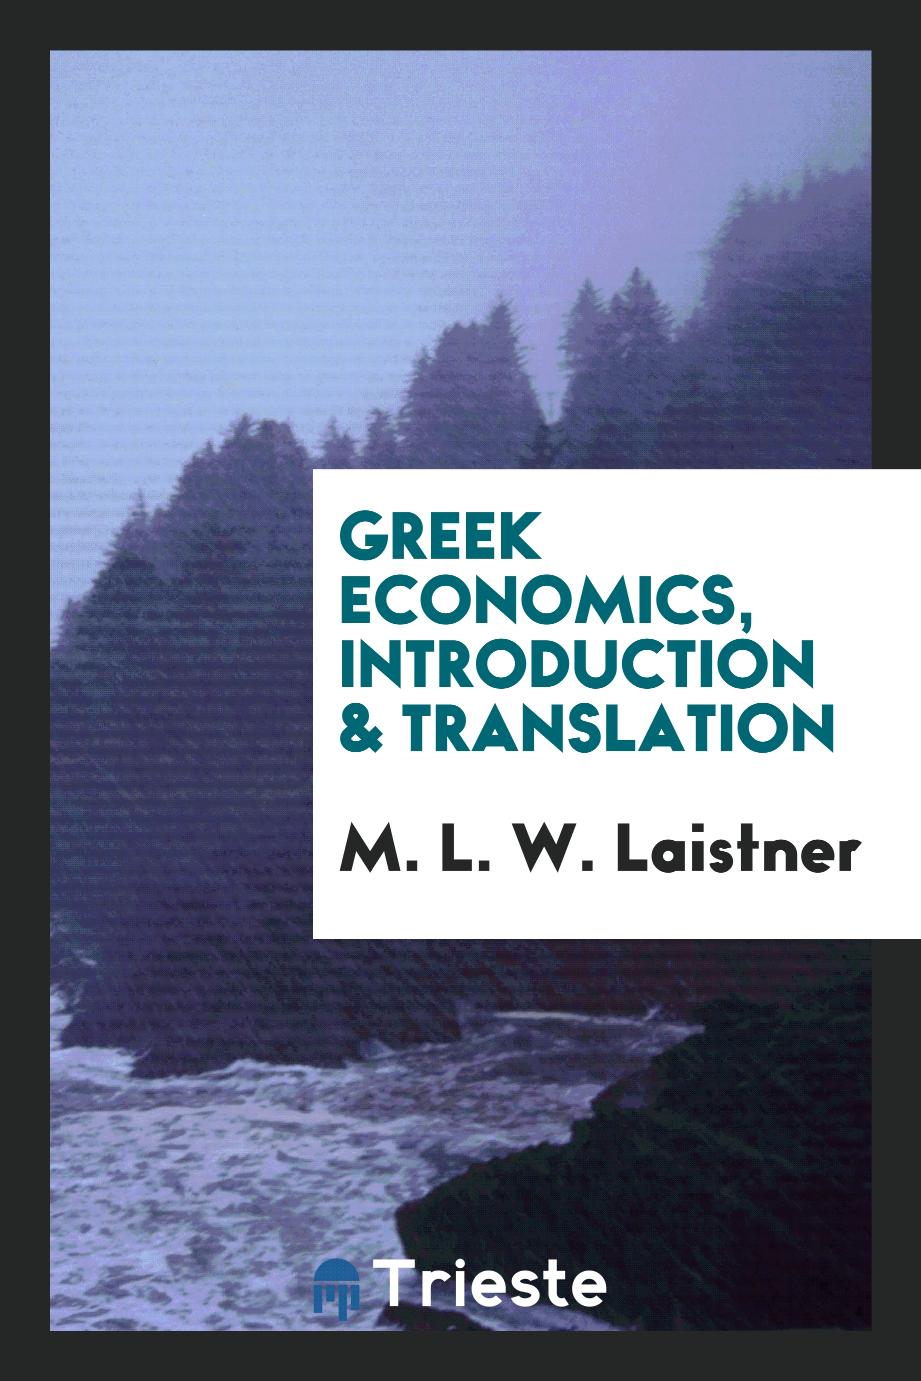 Greek economics, introduction & translation